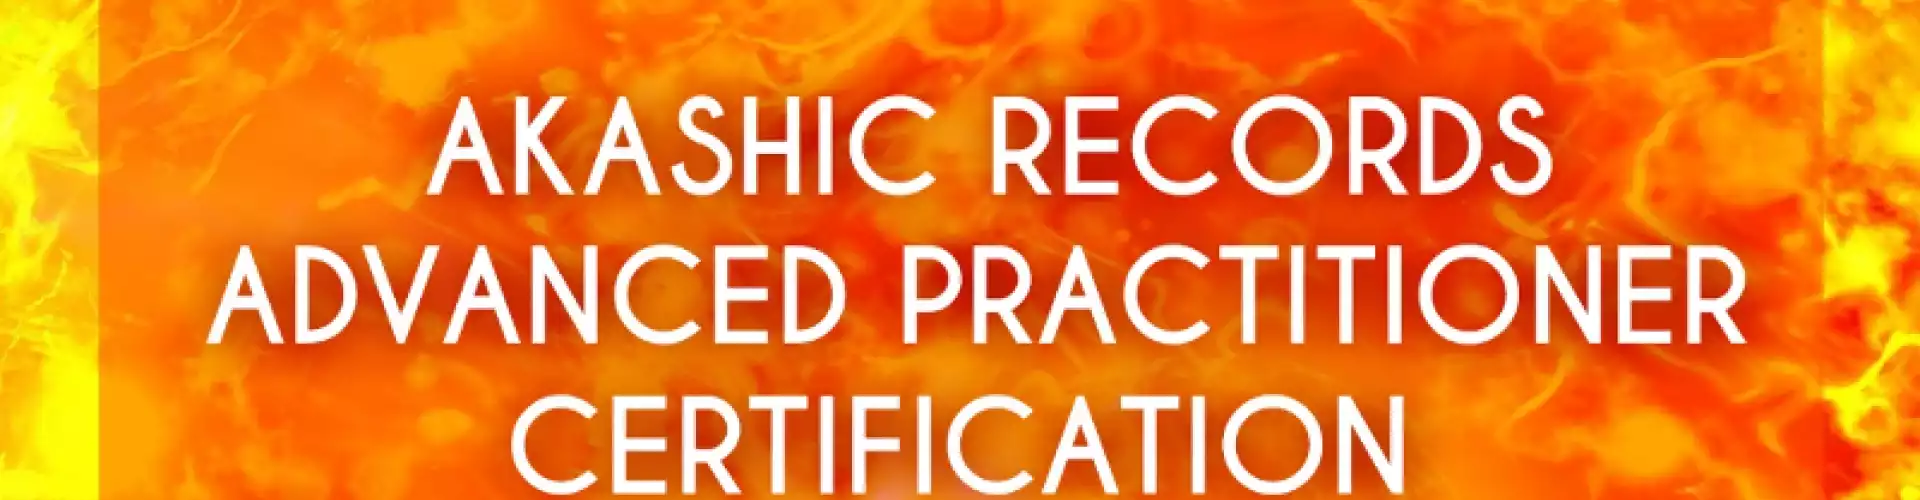 Akashic Records  Advanced Practitioner Certification - November 13, 2020 - Amy Mak